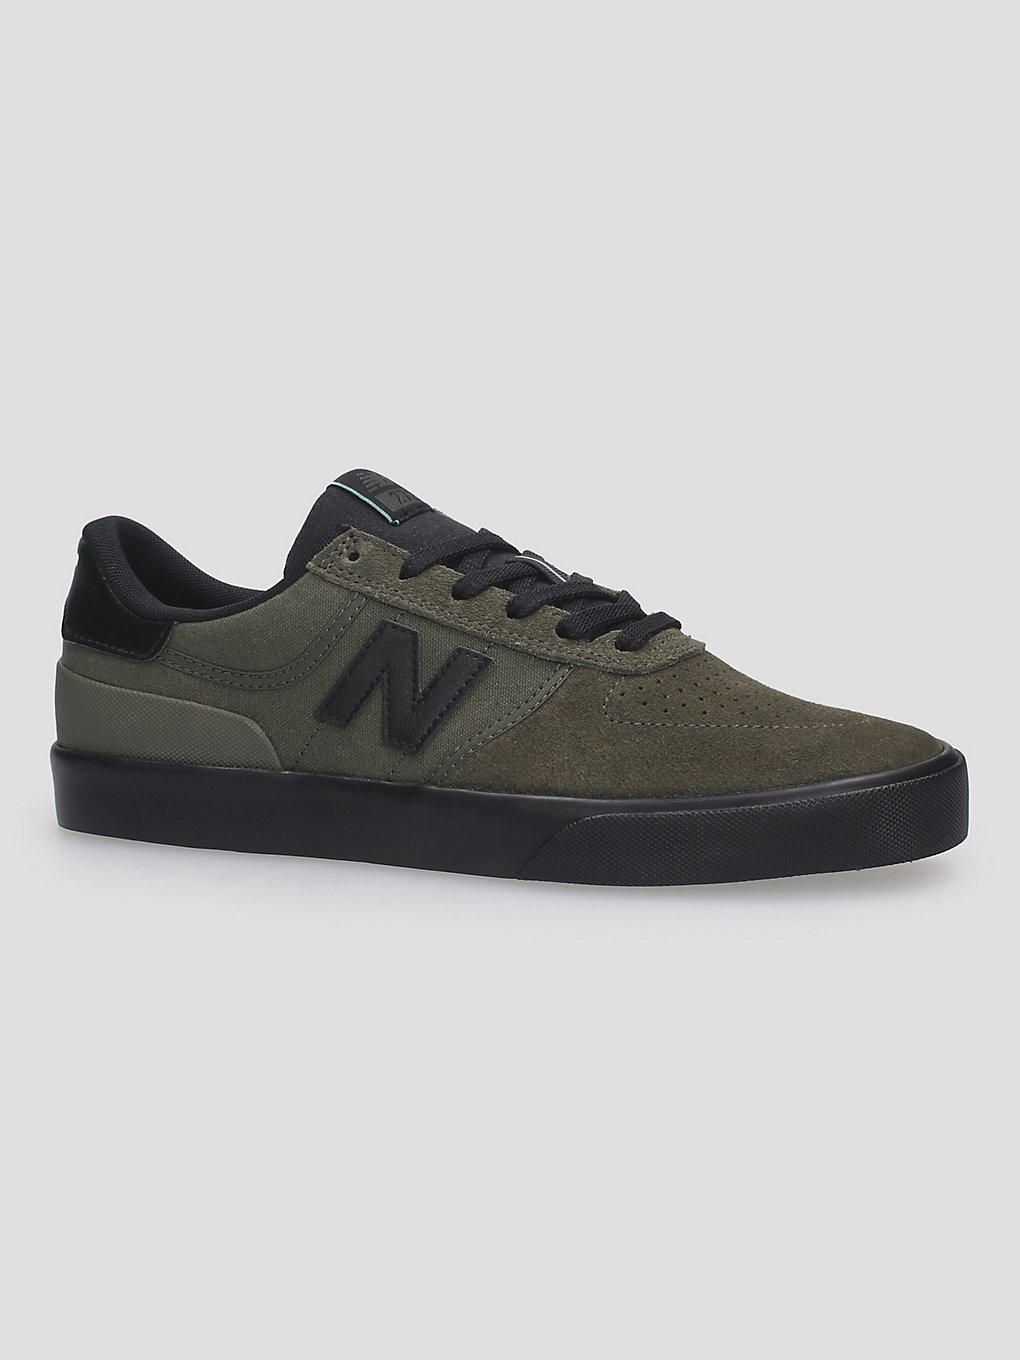 New Balance Numeric 272 Skate Shoes olive